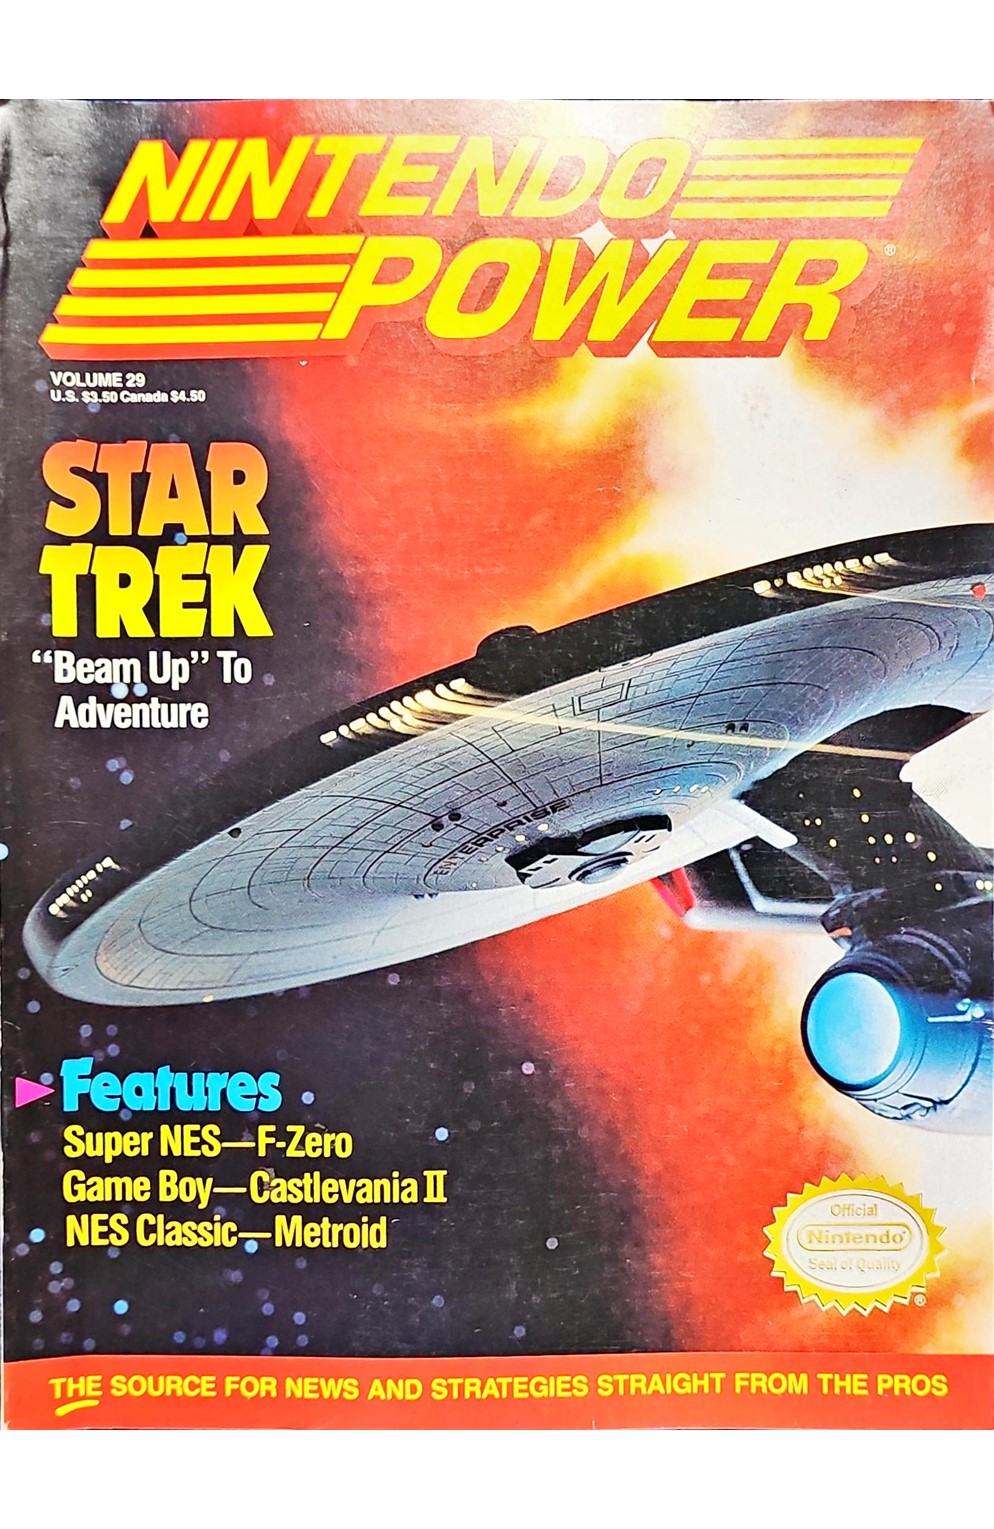 Nintendo Power Volume 29 Star Trek With Poster